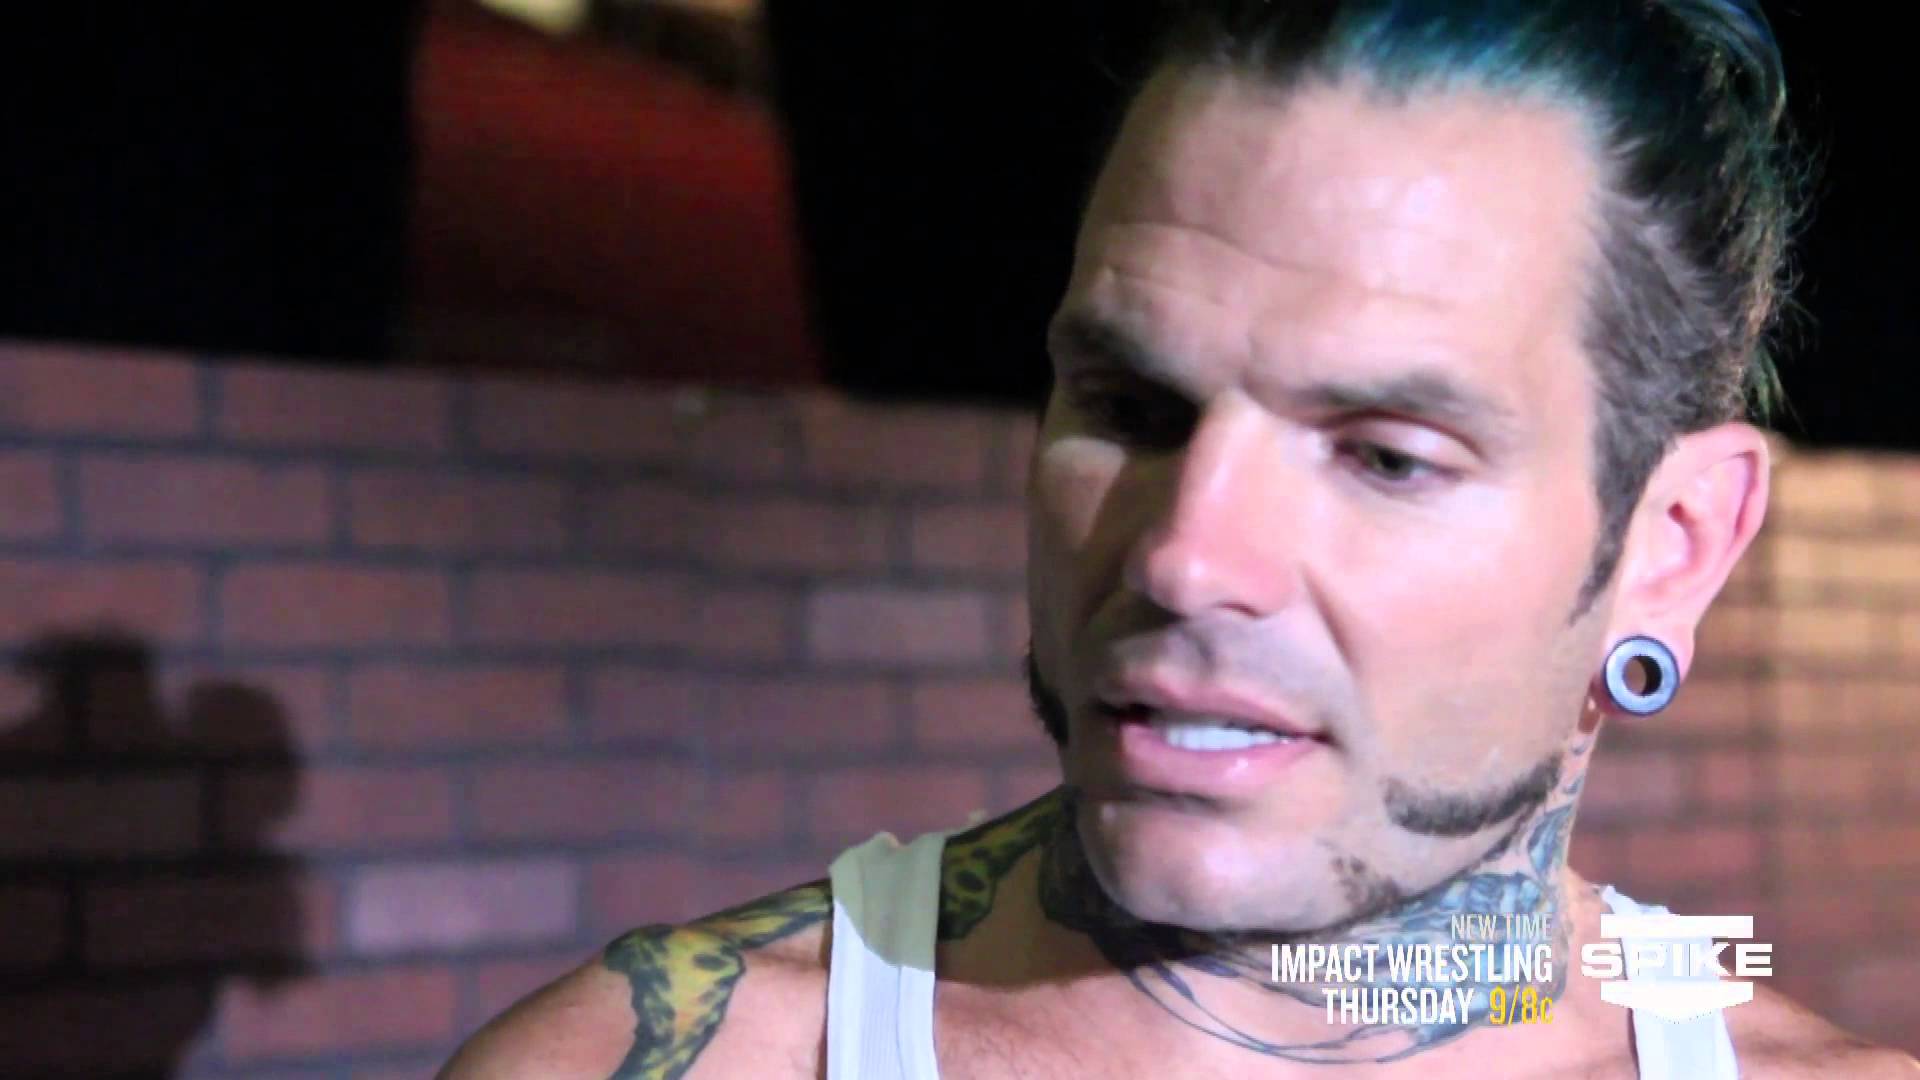 19 Stylish Jeff Hardy Neck Tattoos